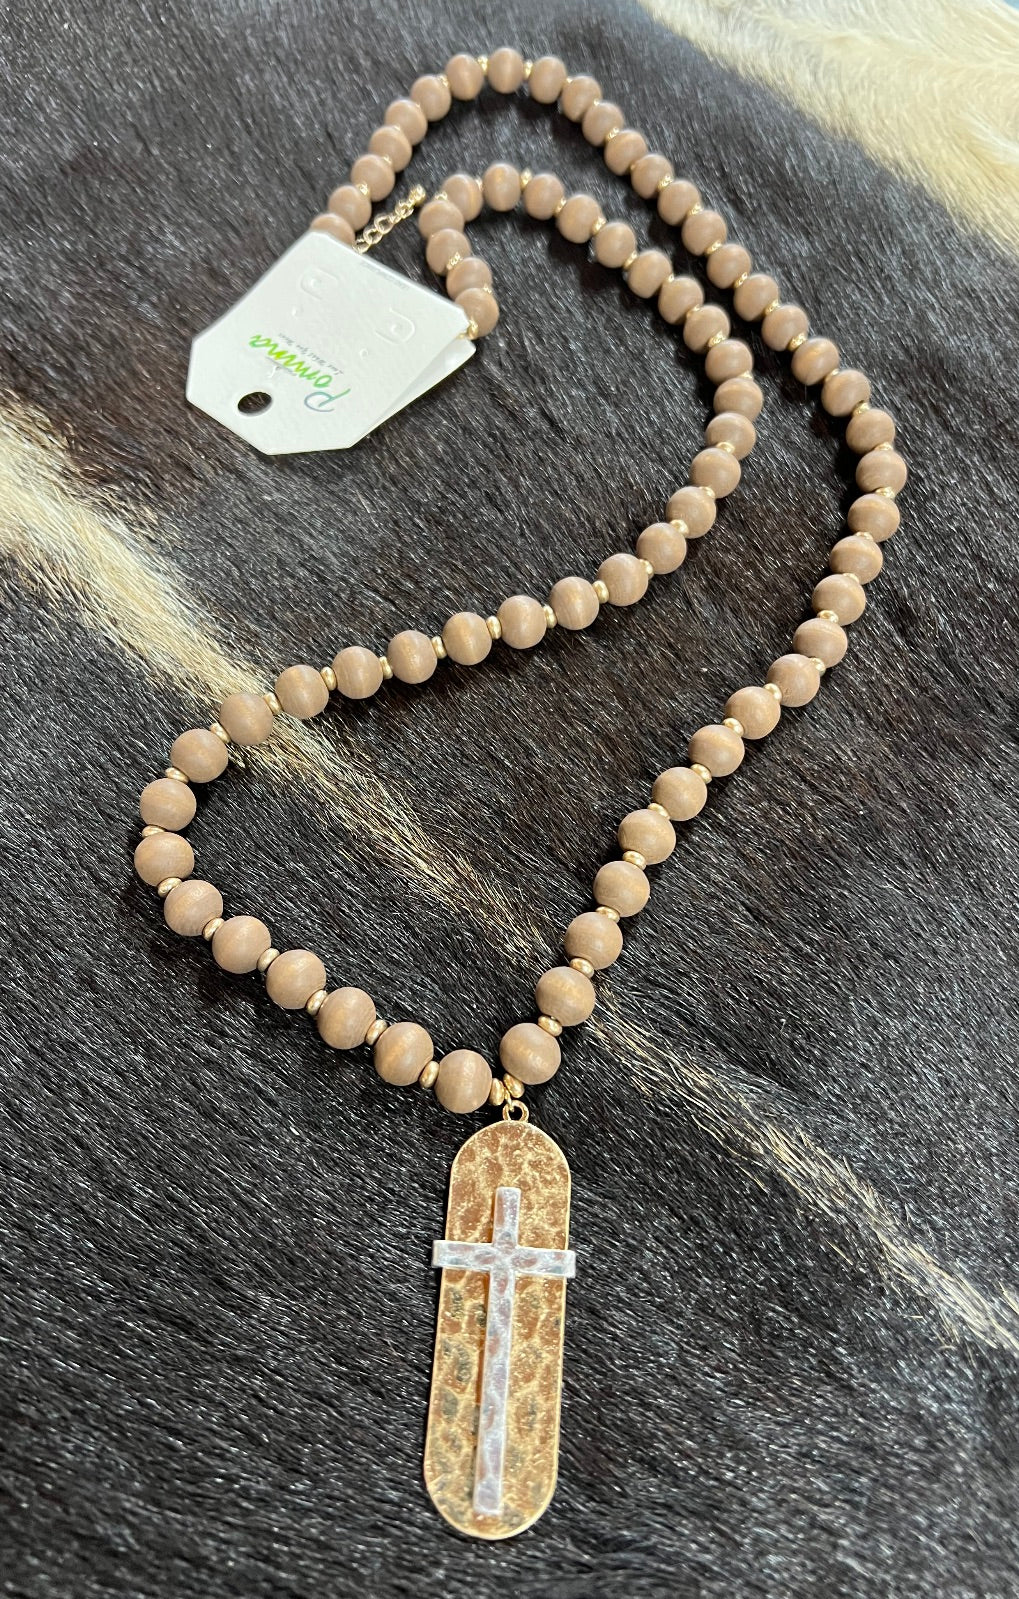 Gold Cross pendant necklace